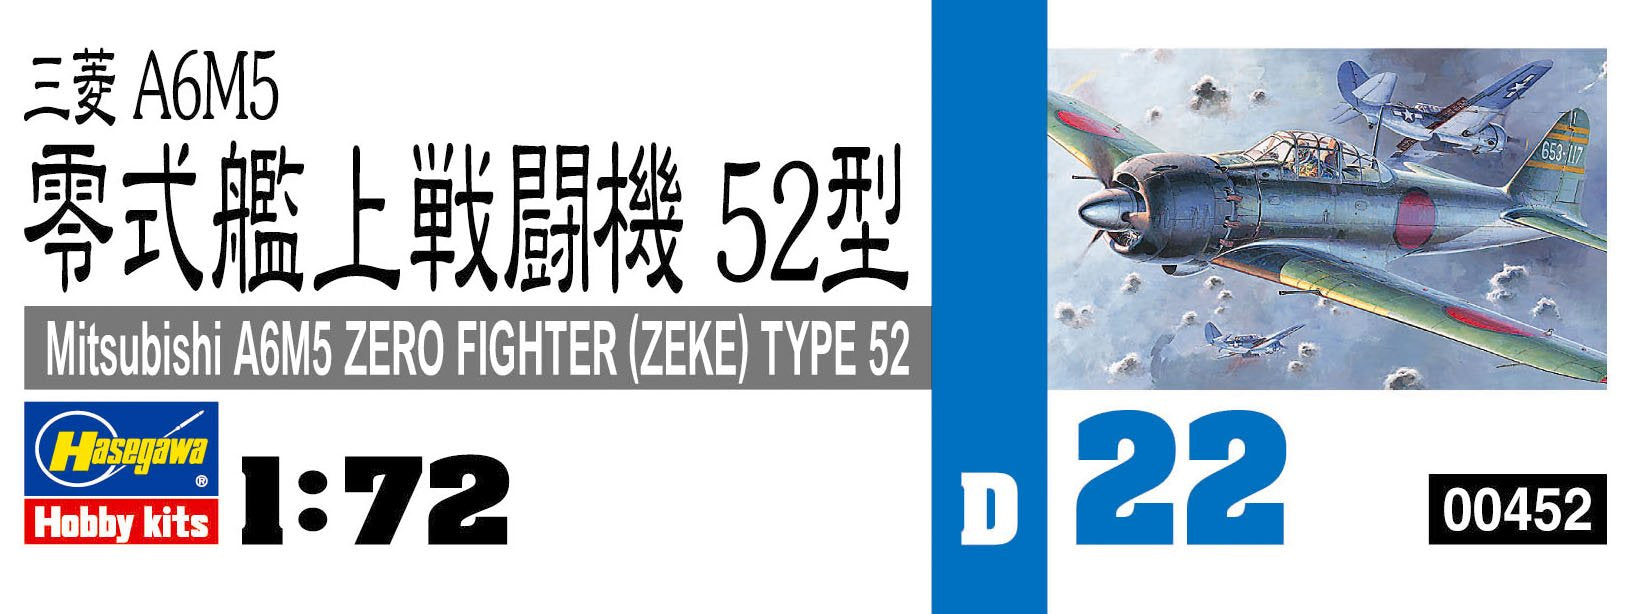 HASEGAWA 1/72 Mitsubishi A6M5 Zero Fighter Zeke Type 52 Japanese Navy Carrier Fighter Plastic Model